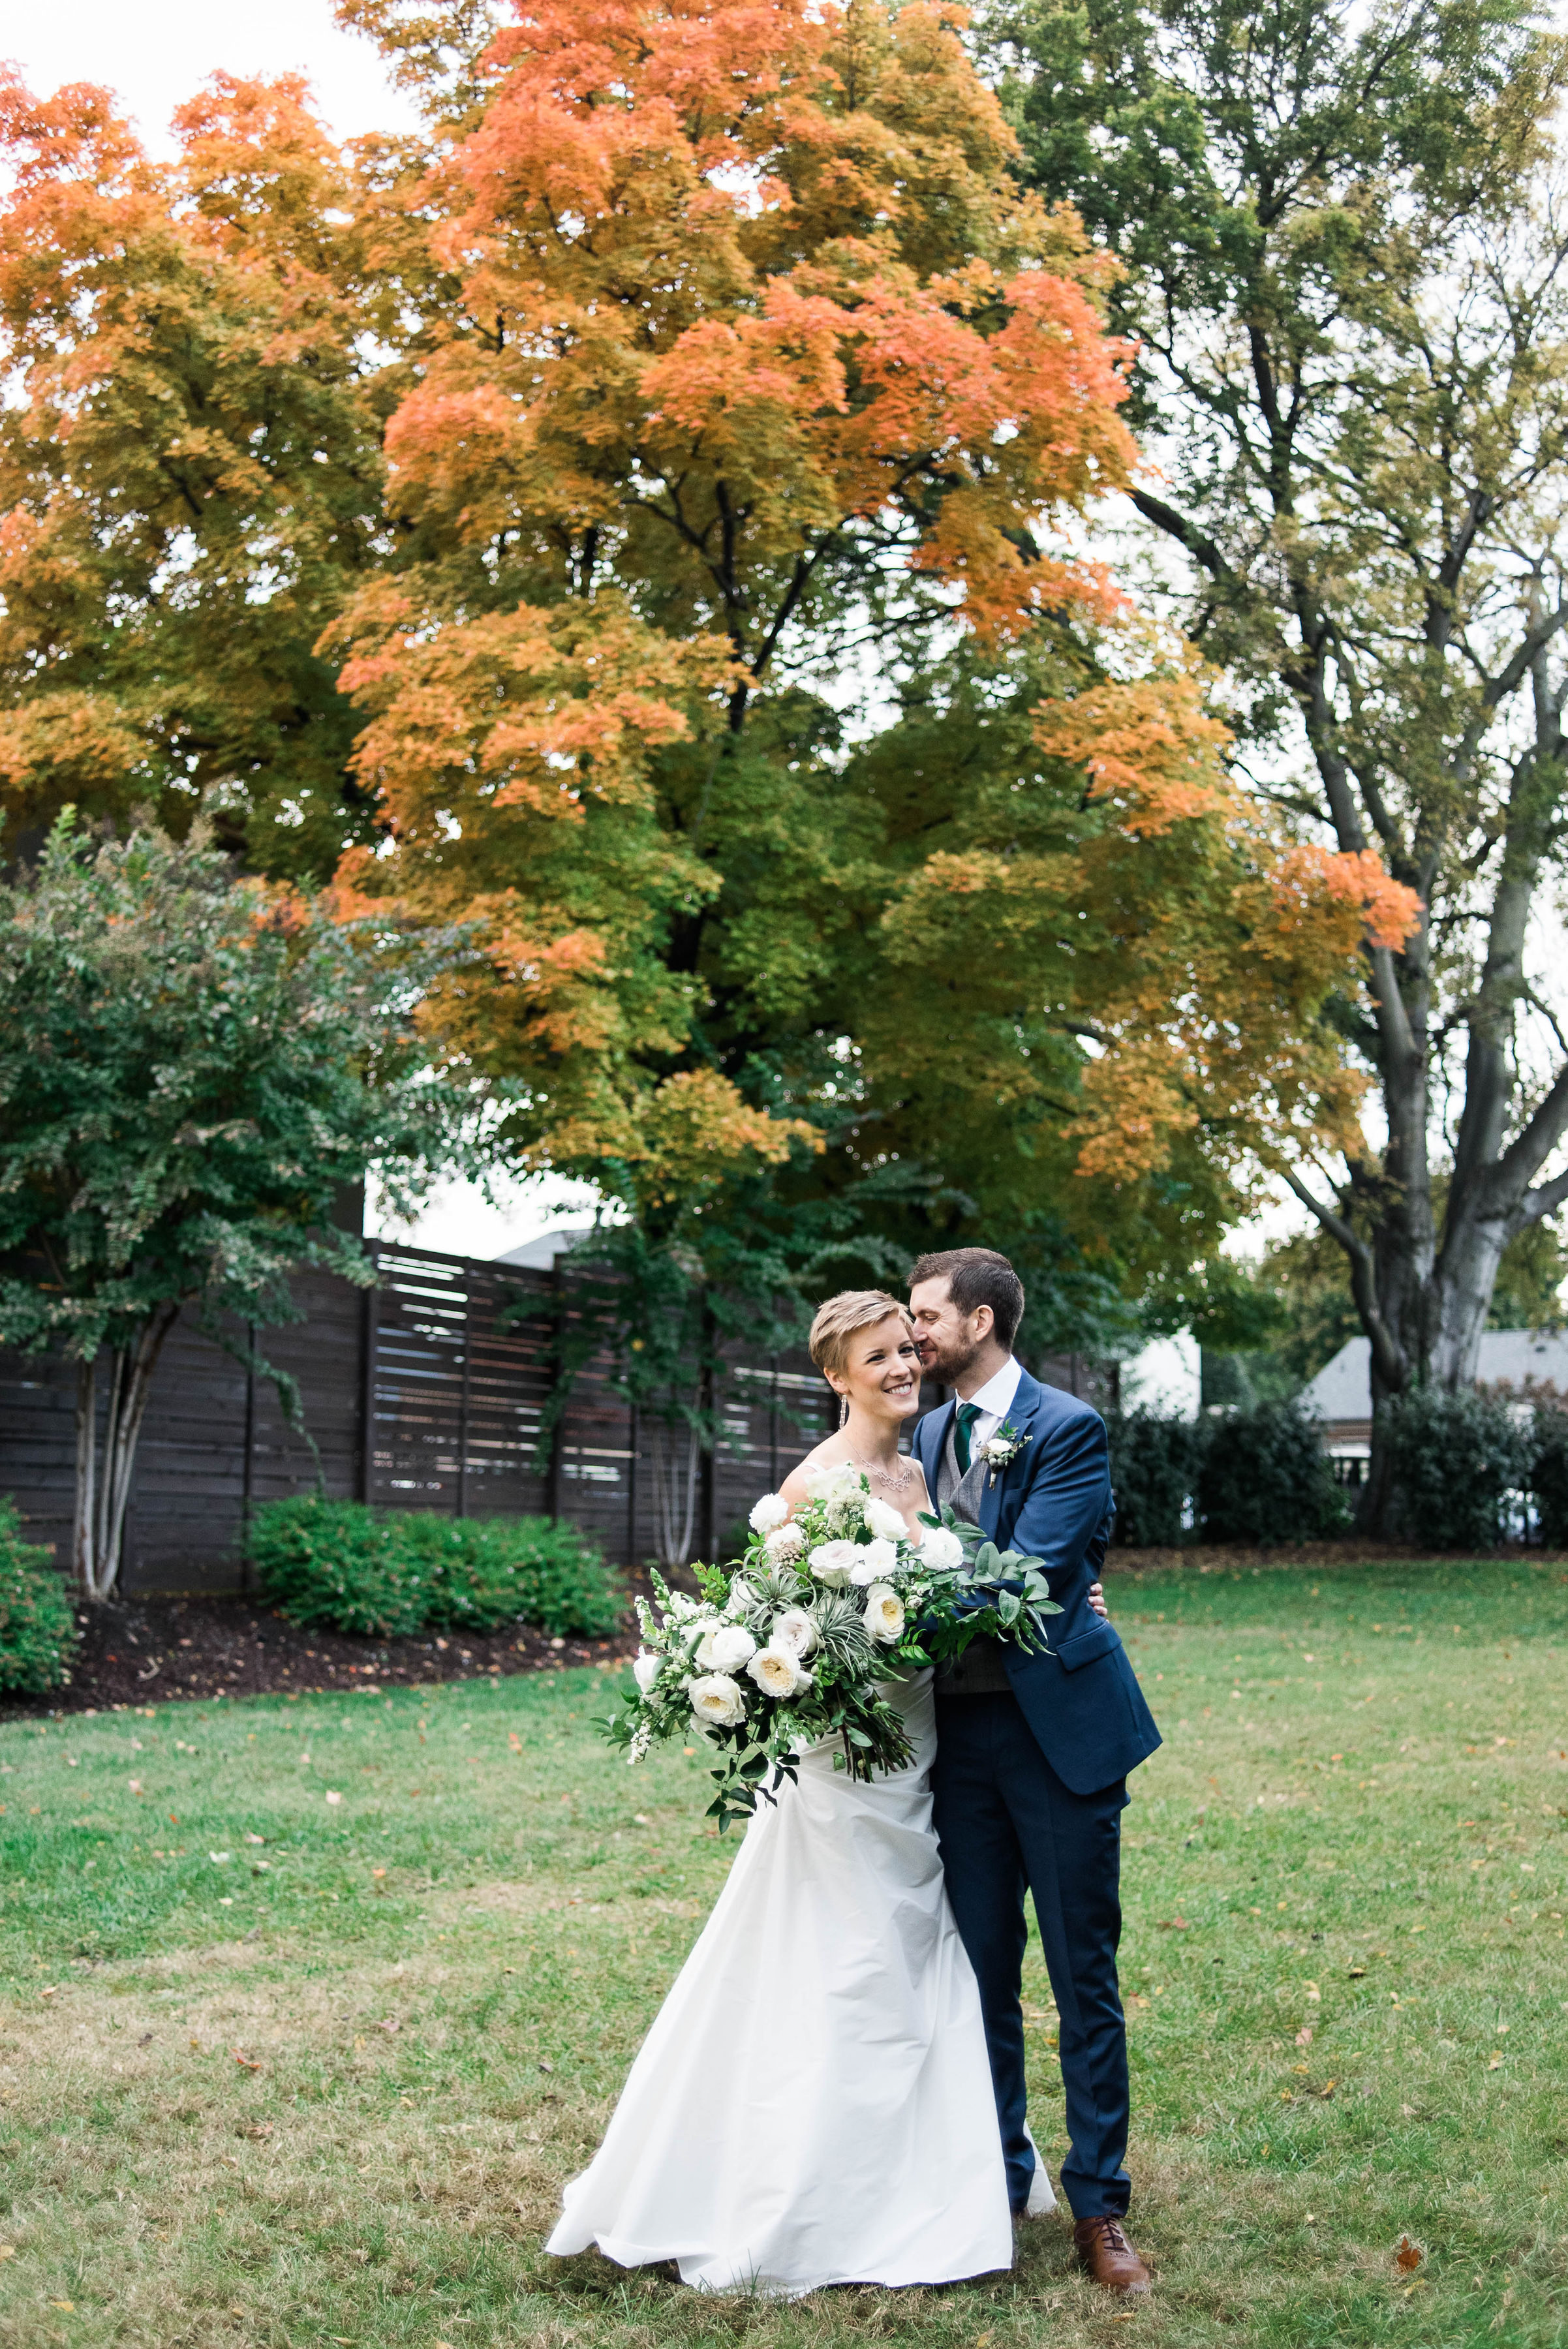 Organic bridal bouquet with garden roses, ranunculus, air plants, and greenery // Nashville, TN Wedding Florist